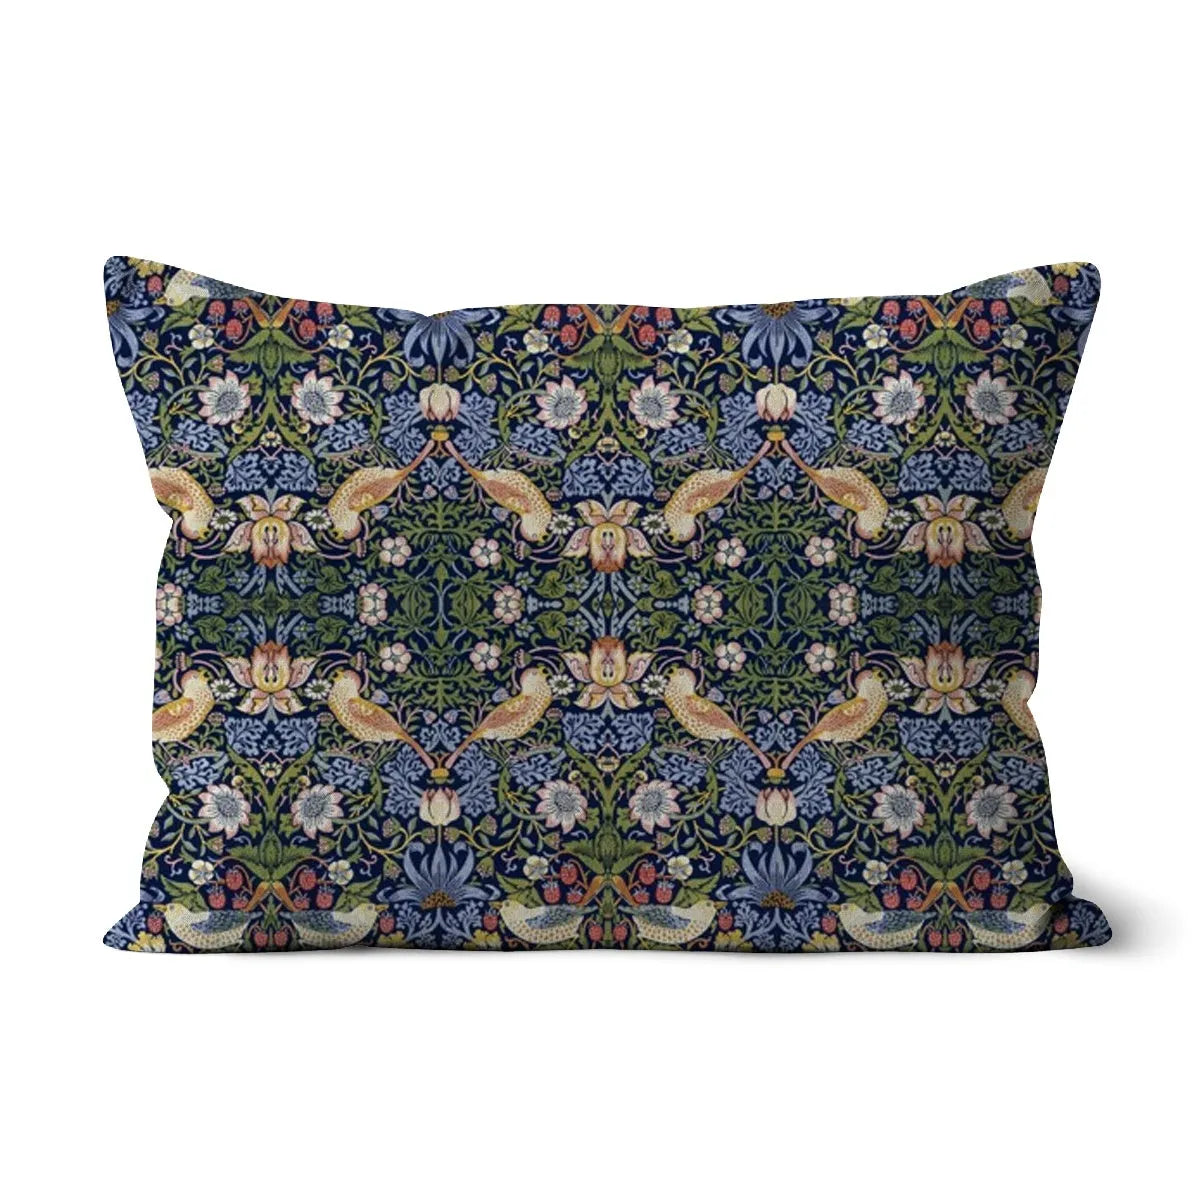 Strawberry Thief - William Morris Cushion - Decorative Throw Pillow - Linen / 19’x13’ - Throw Pillows - Aesthetic Art